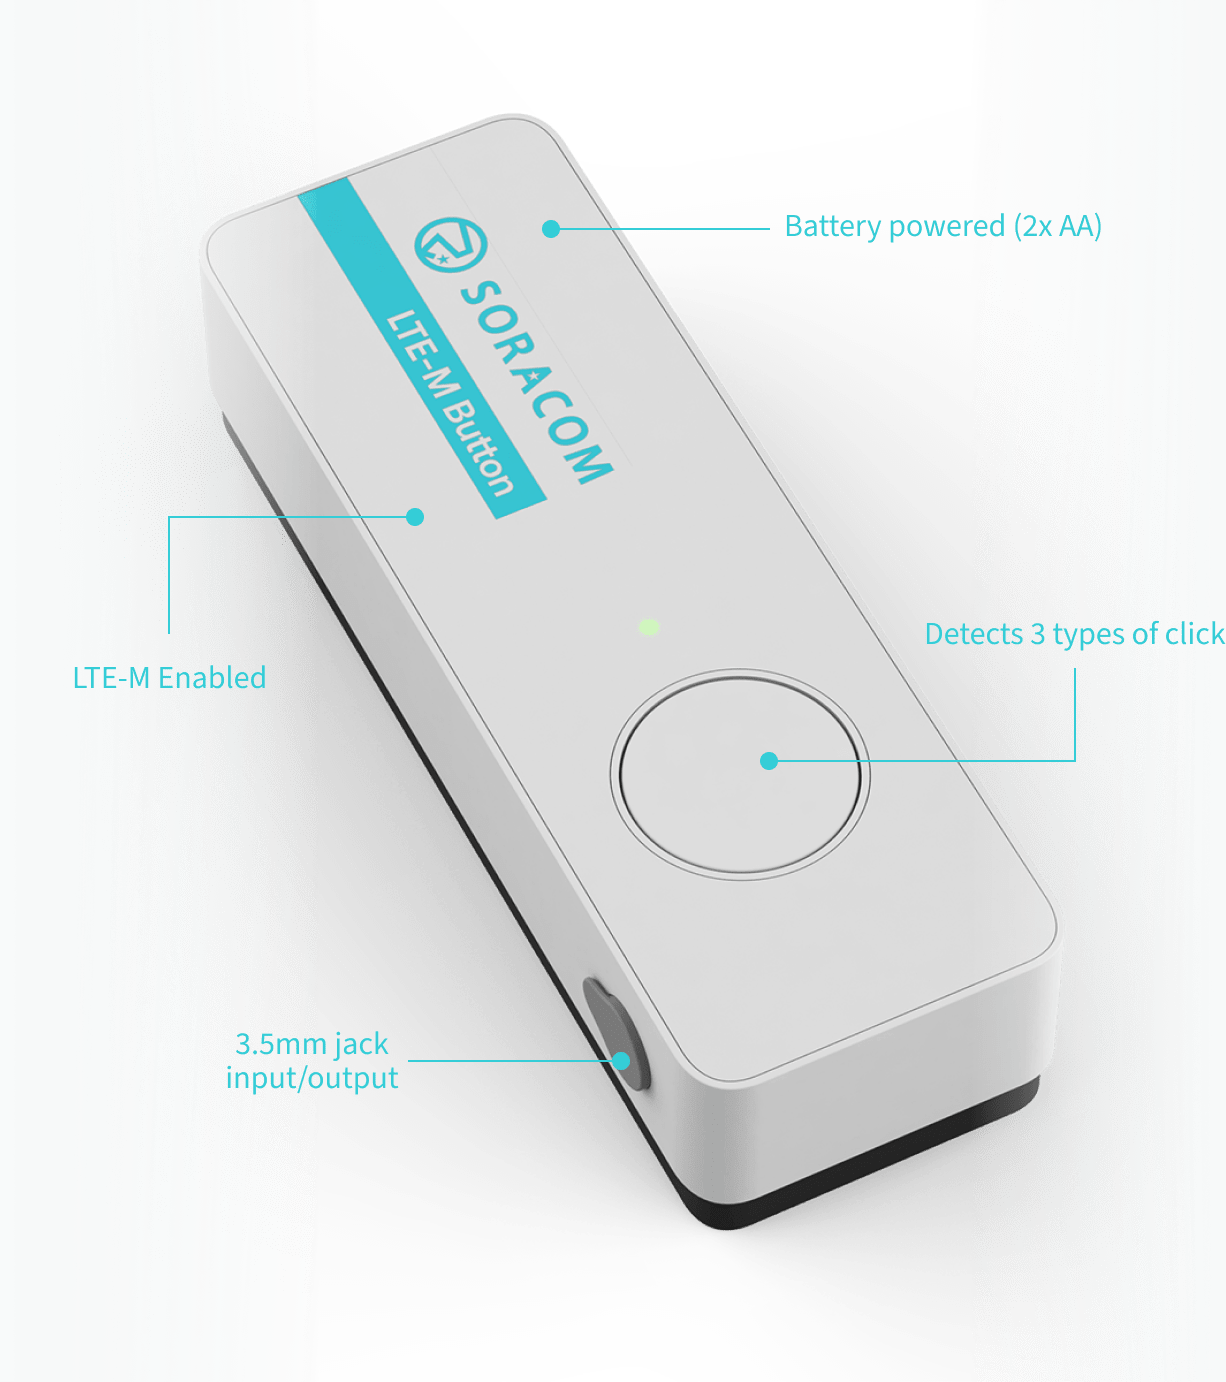 The Soracom IoT LTE-M Button